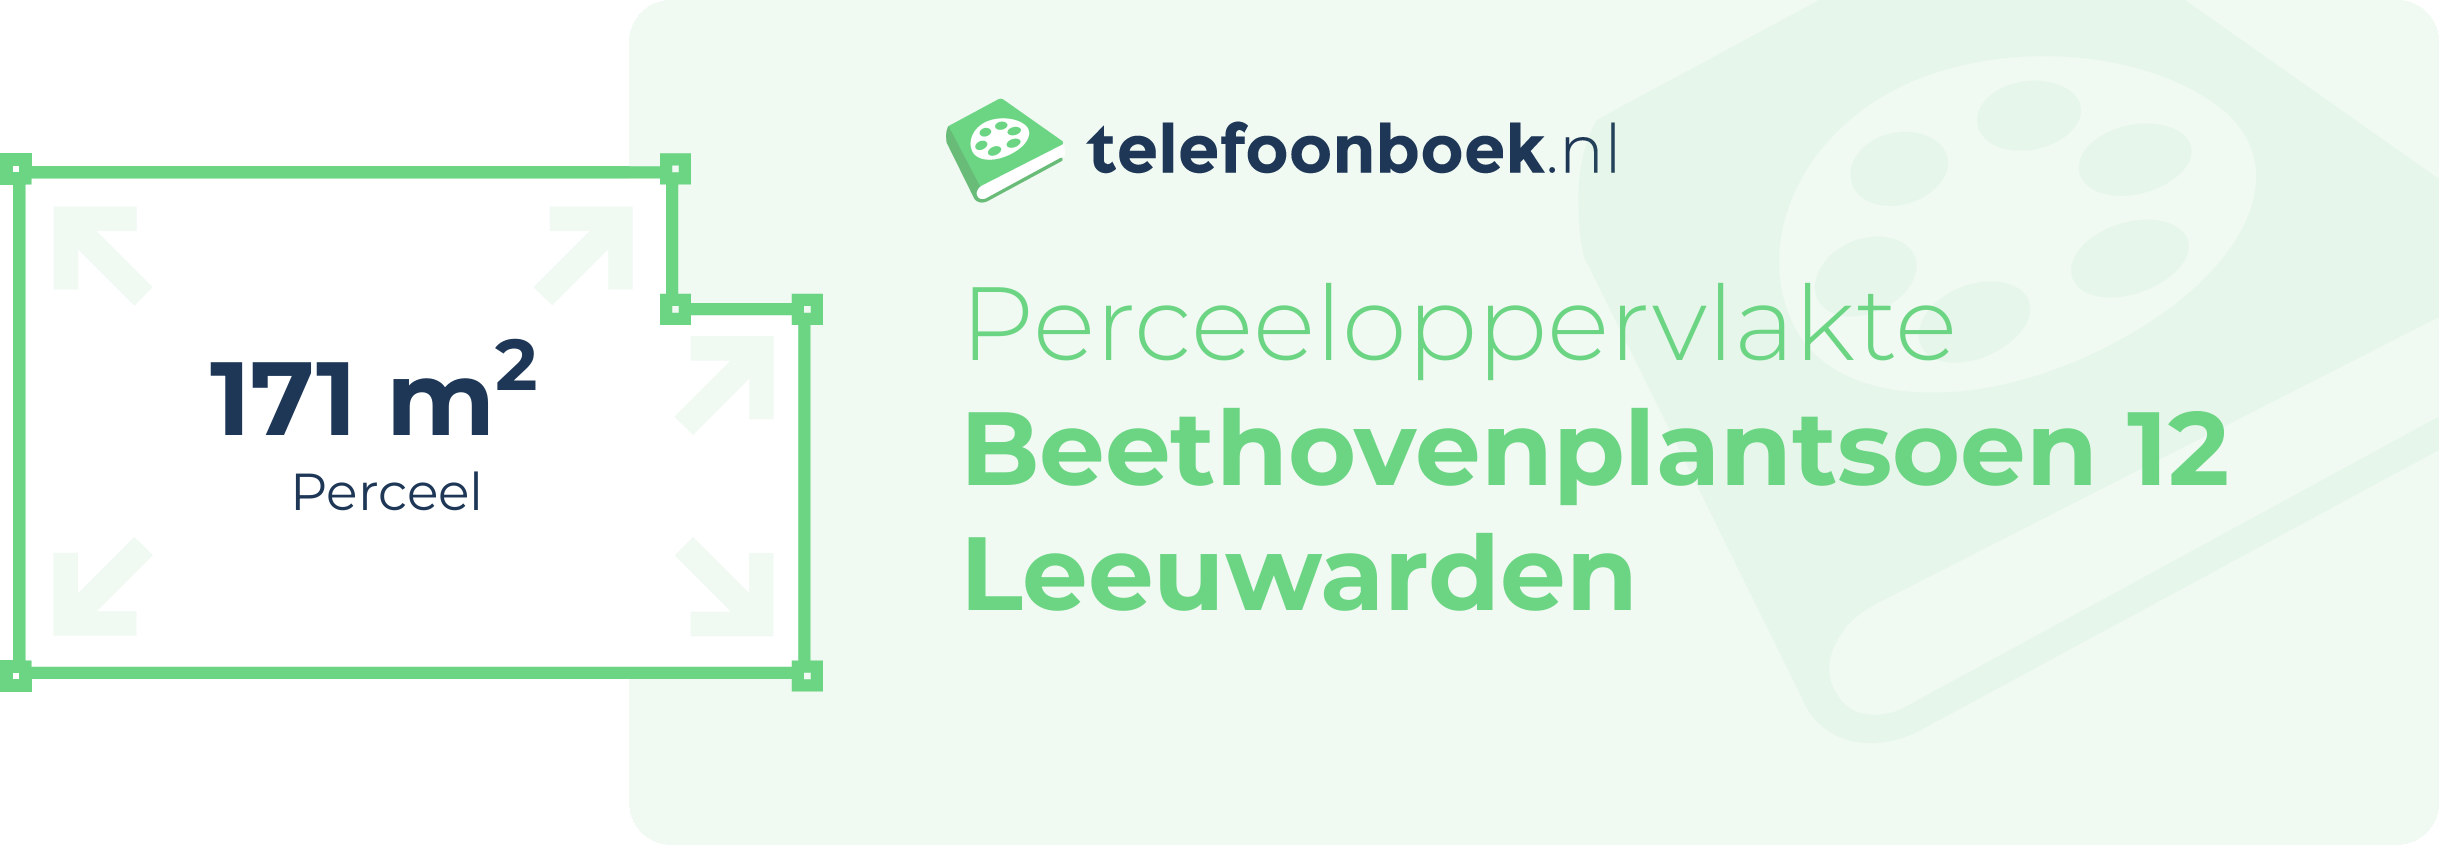 Perceeloppervlakte Beethovenplantsoen 12 Leeuwarden